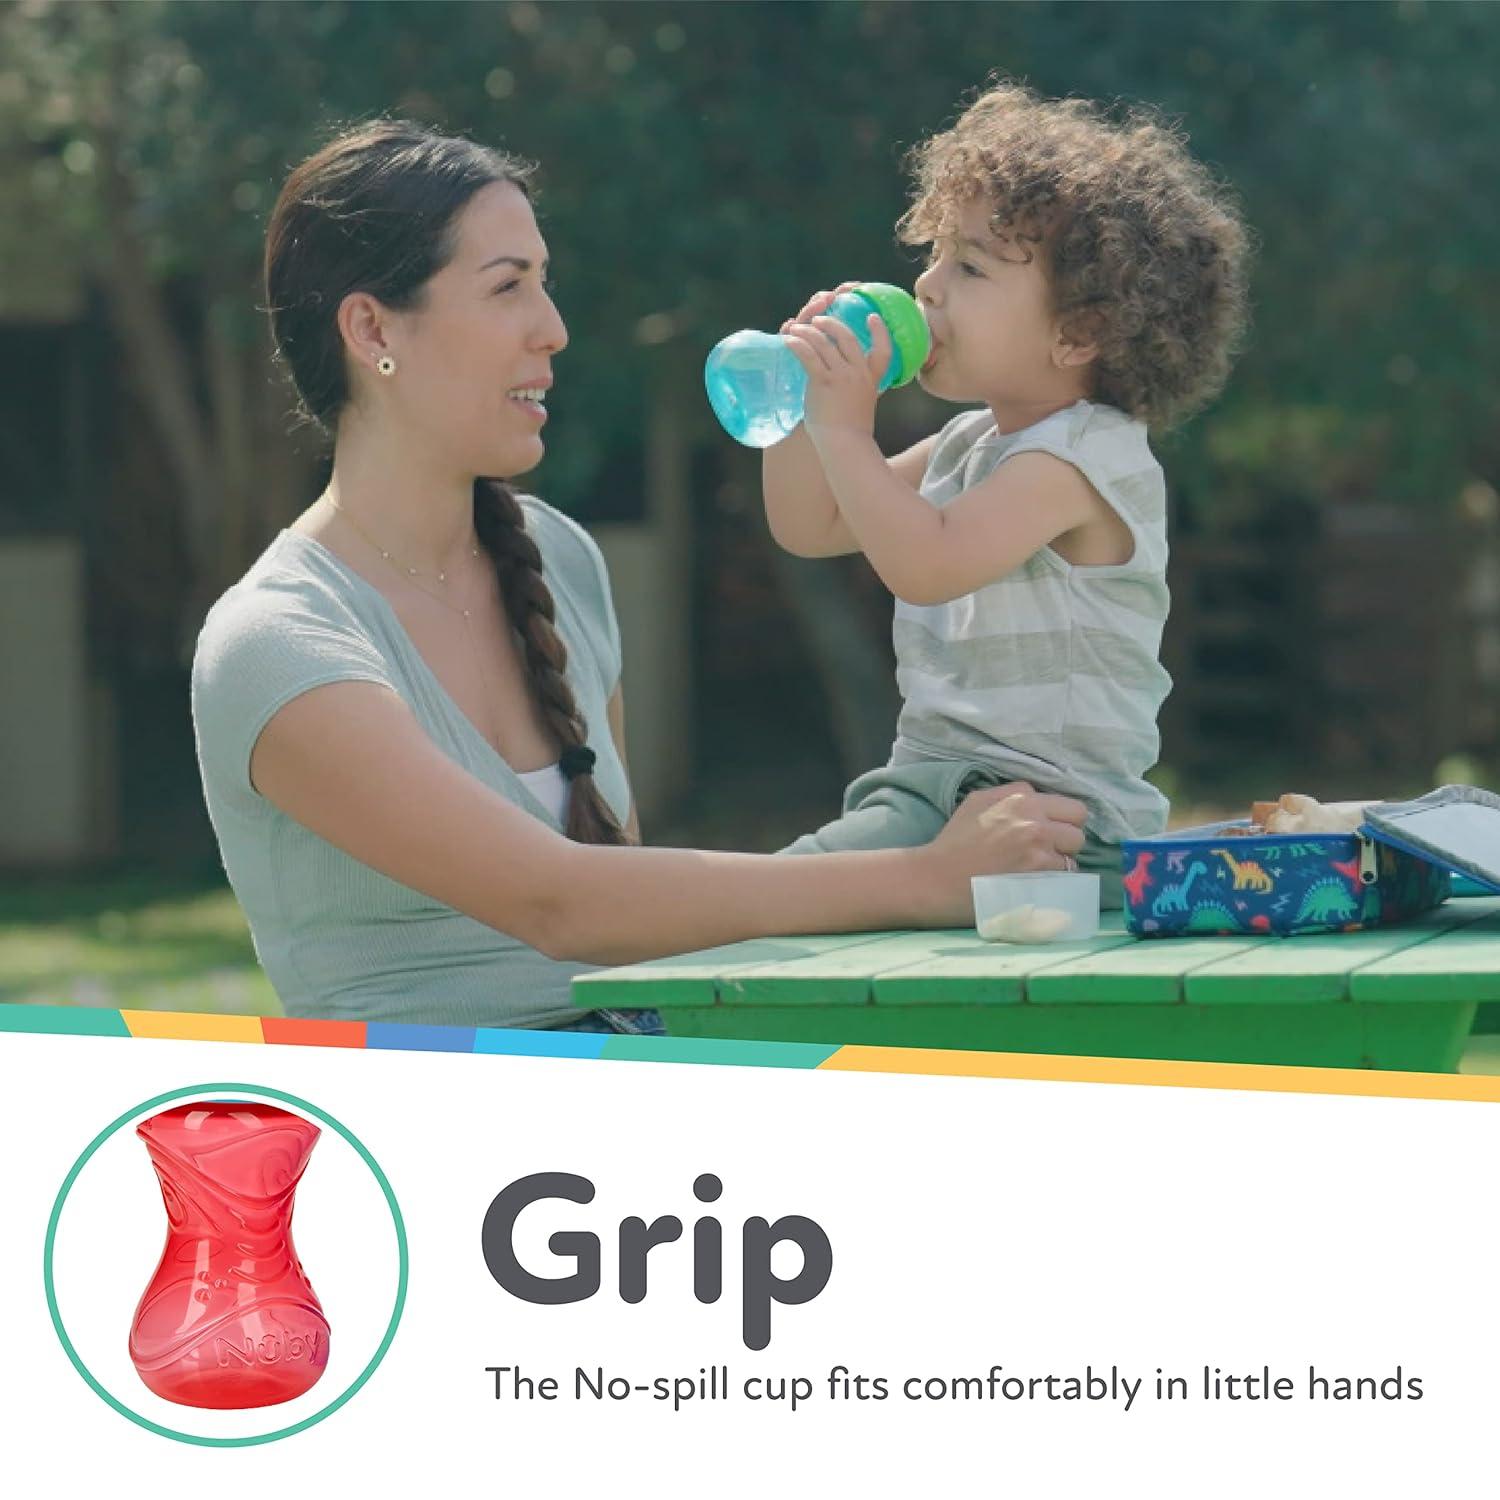 Nuby 10oz No-Spill Cup Gripper with Soft Spout, Unique Direct